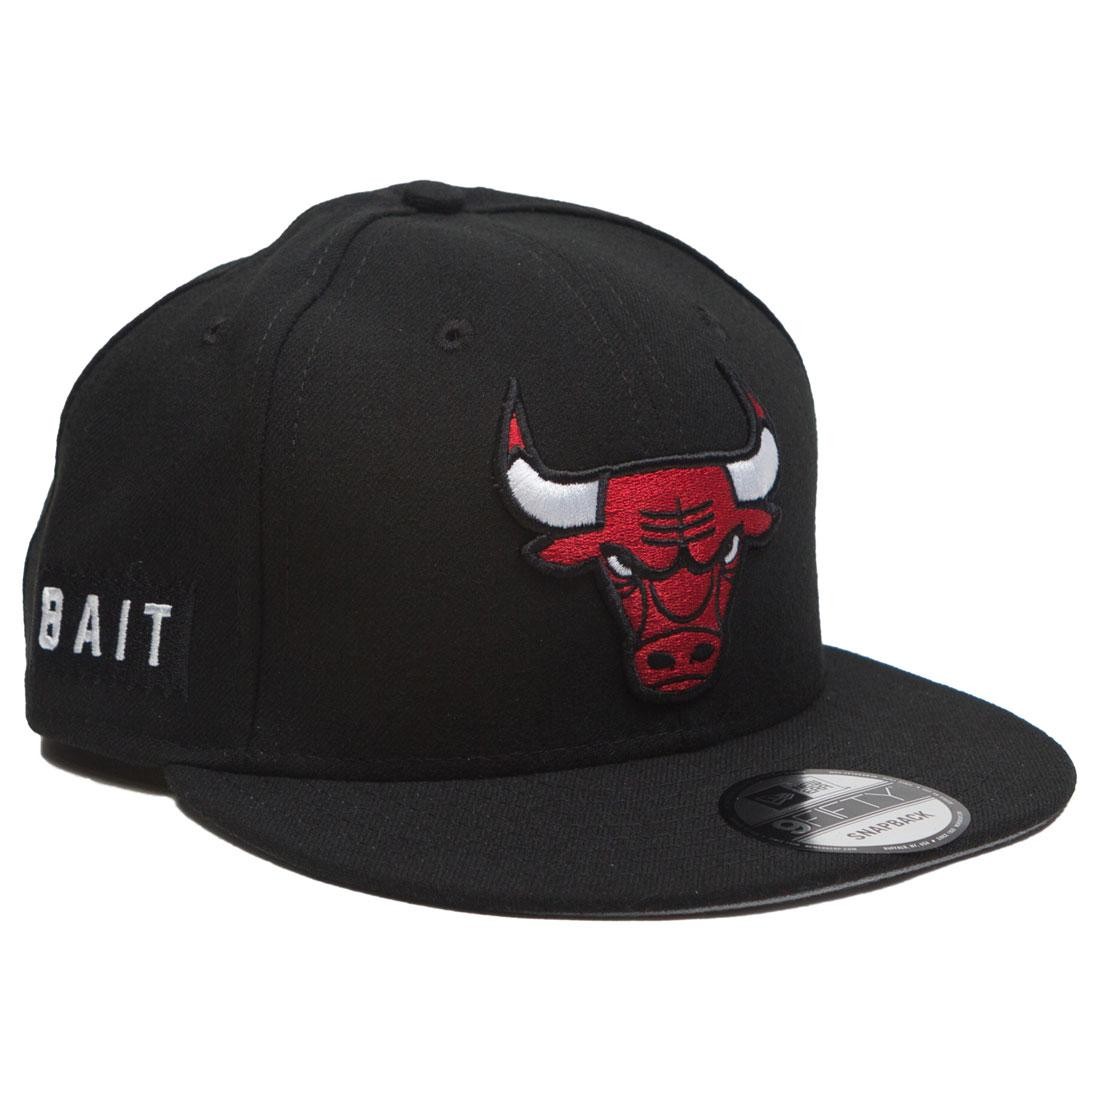 Mitchell & Ness Chicago Bulls Snapback Hat Cap Black/Red Eyes